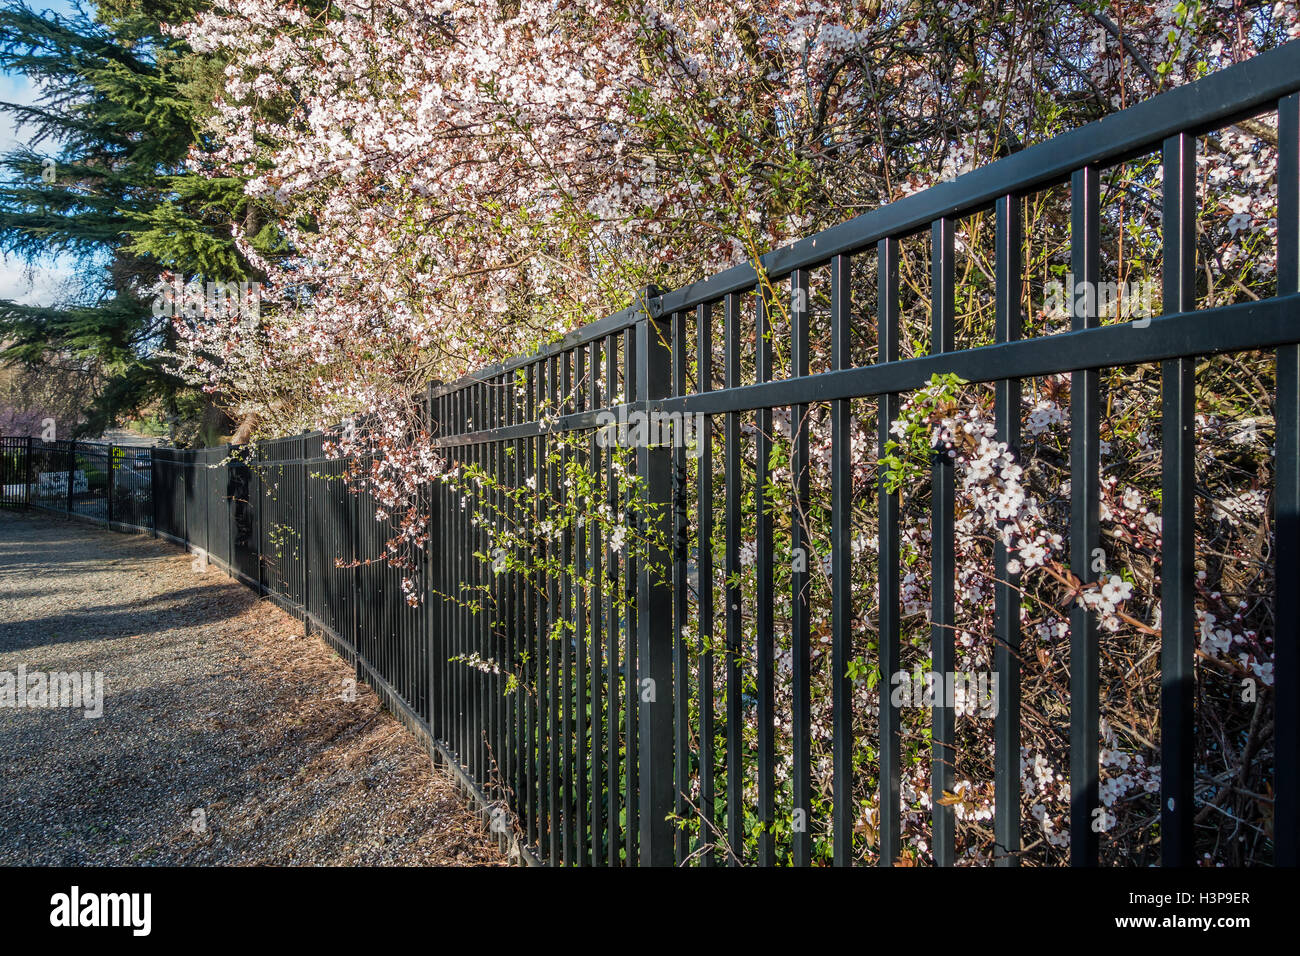 White Cherry Blossoms están en plena floración junto a una valla metálica en Seatac, Washington. Foto de stock